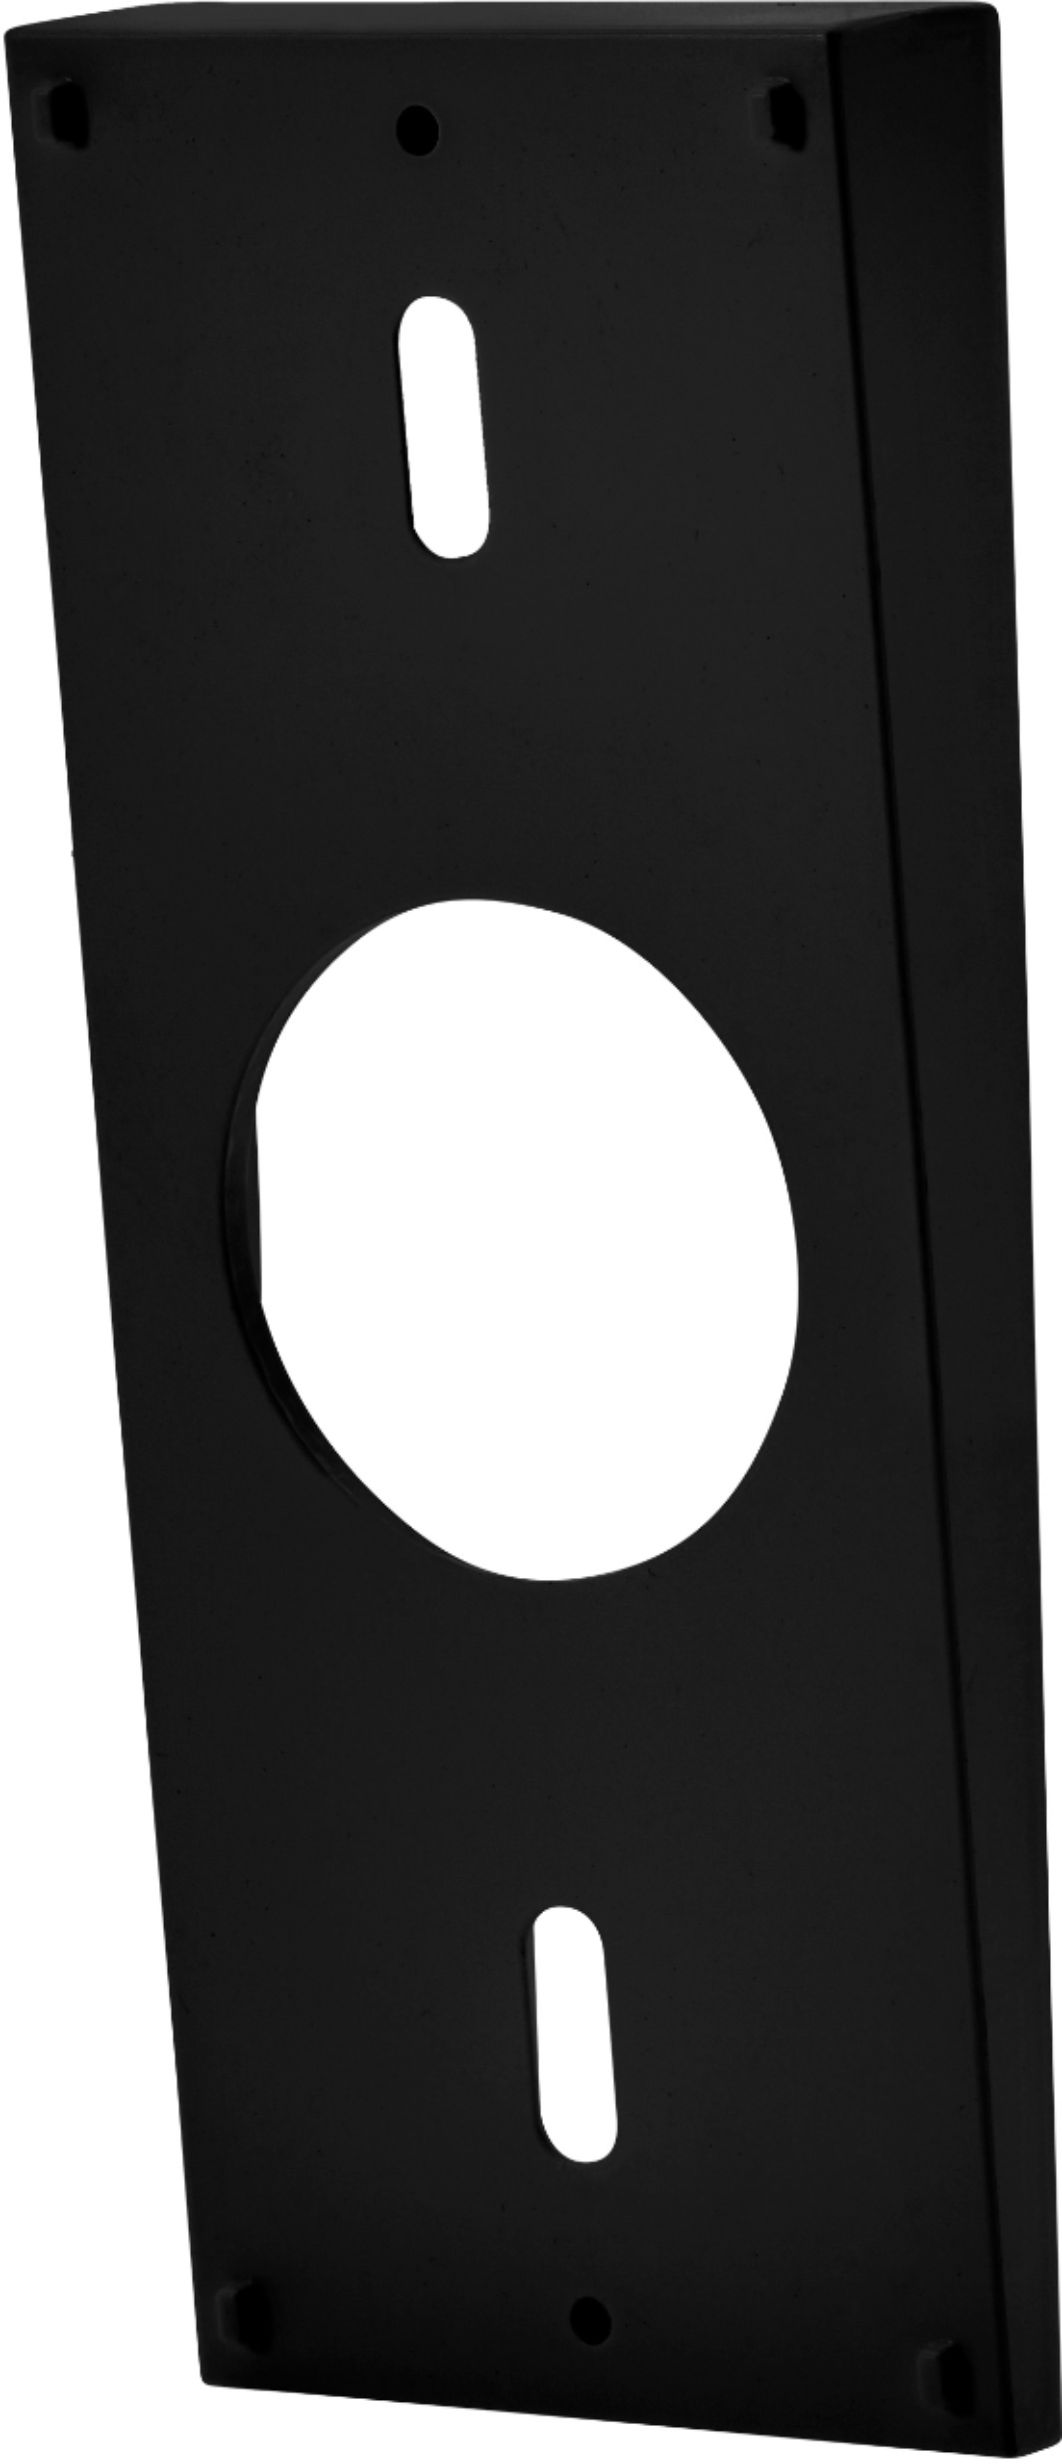 Wedge Kit for Ring Video Doorbell Pro - Black